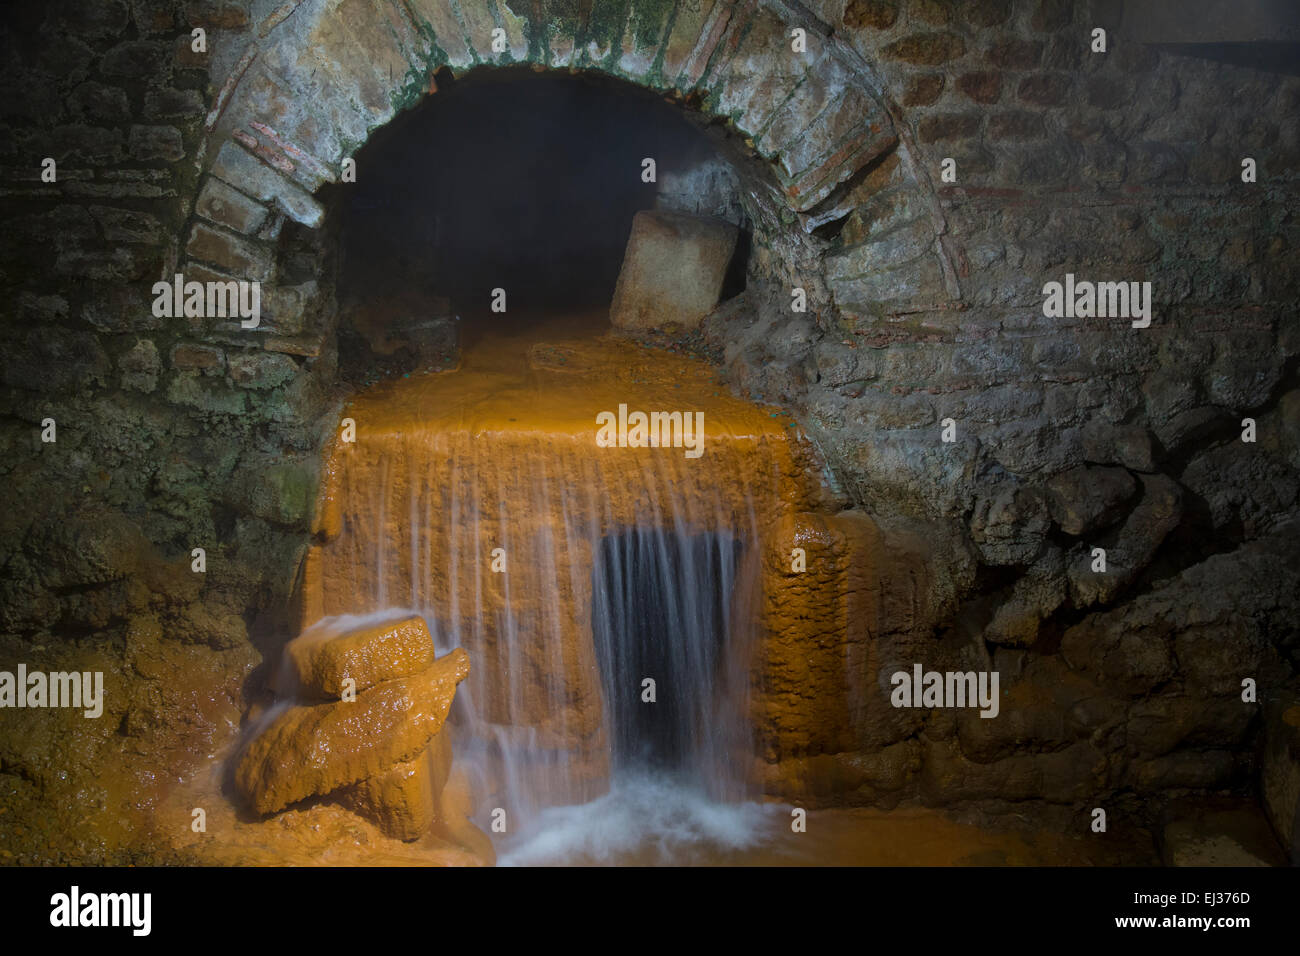 La metropolitana hot springs presso le Terme Romane in bagno, Somerset, Inghilterra, Regno Unito Foto Stock